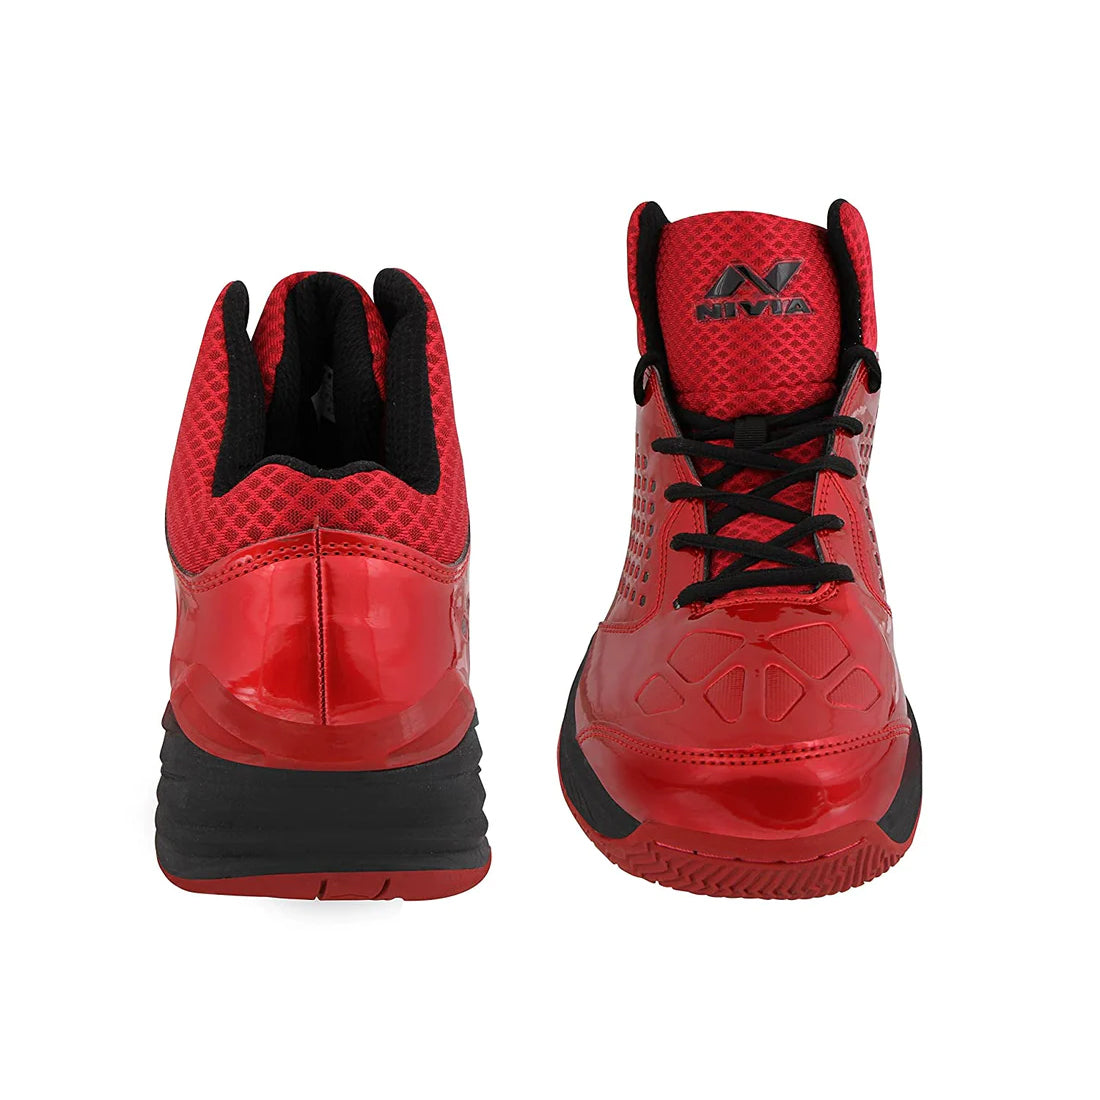 Nivia Warrior 174RB Mesh Basketball Shoes, (Red) - Best Price online Prokicksports.com